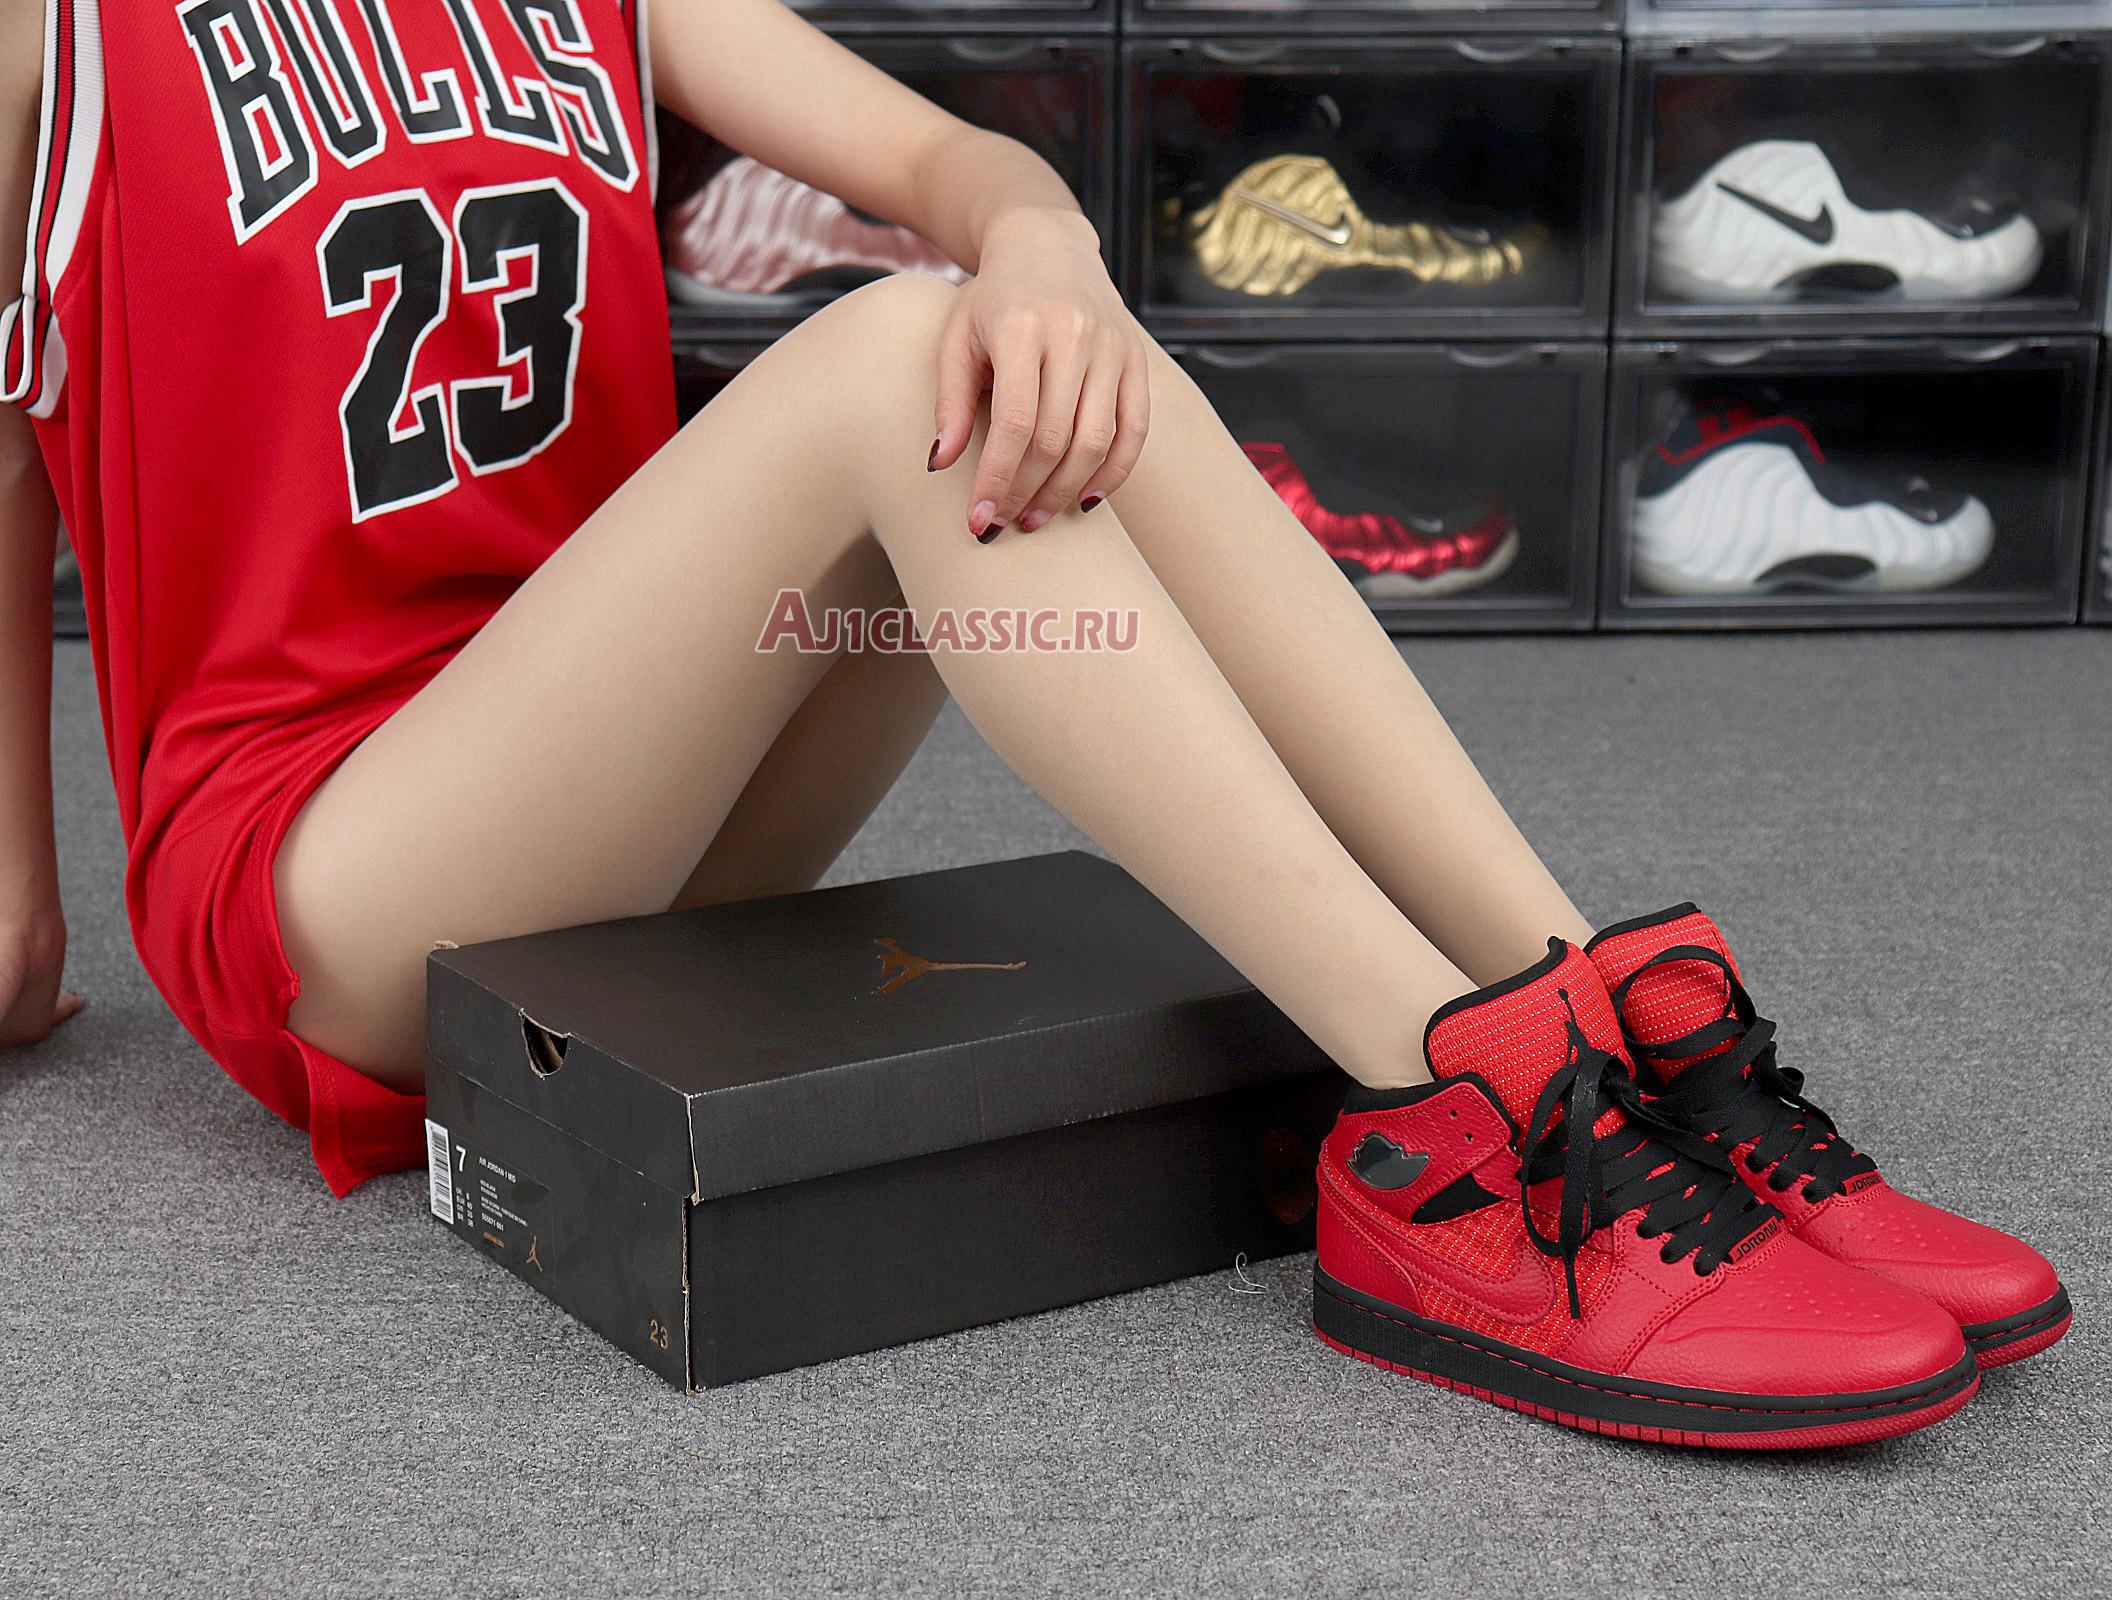 Air Jordan 1 Retro 97 TXT Gym Red 555071-601 Gym Red/Black-Gym Red Sneakers